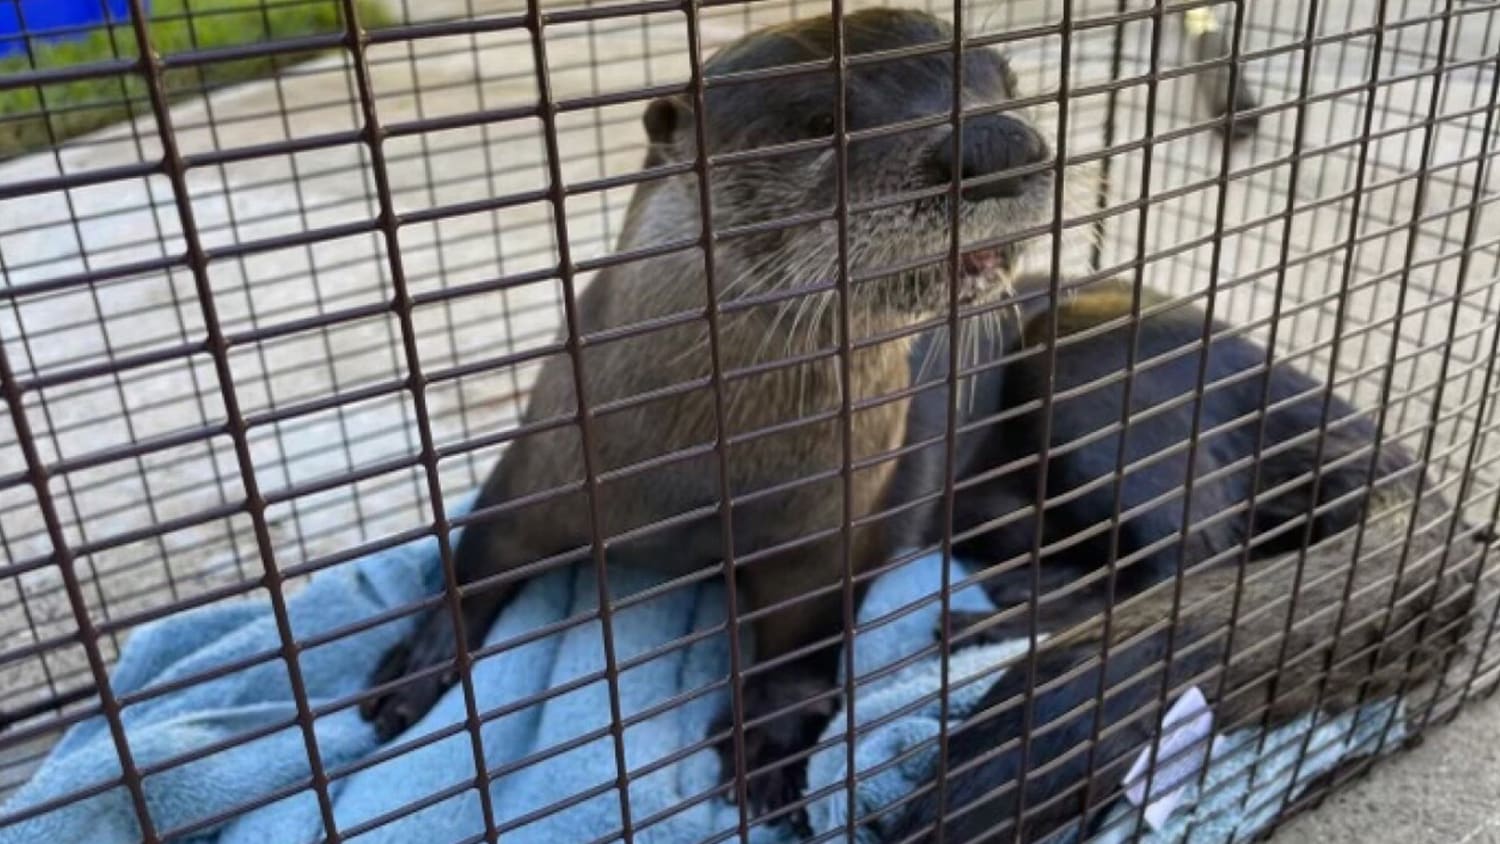 Rabid otter bites man and dog in Florida